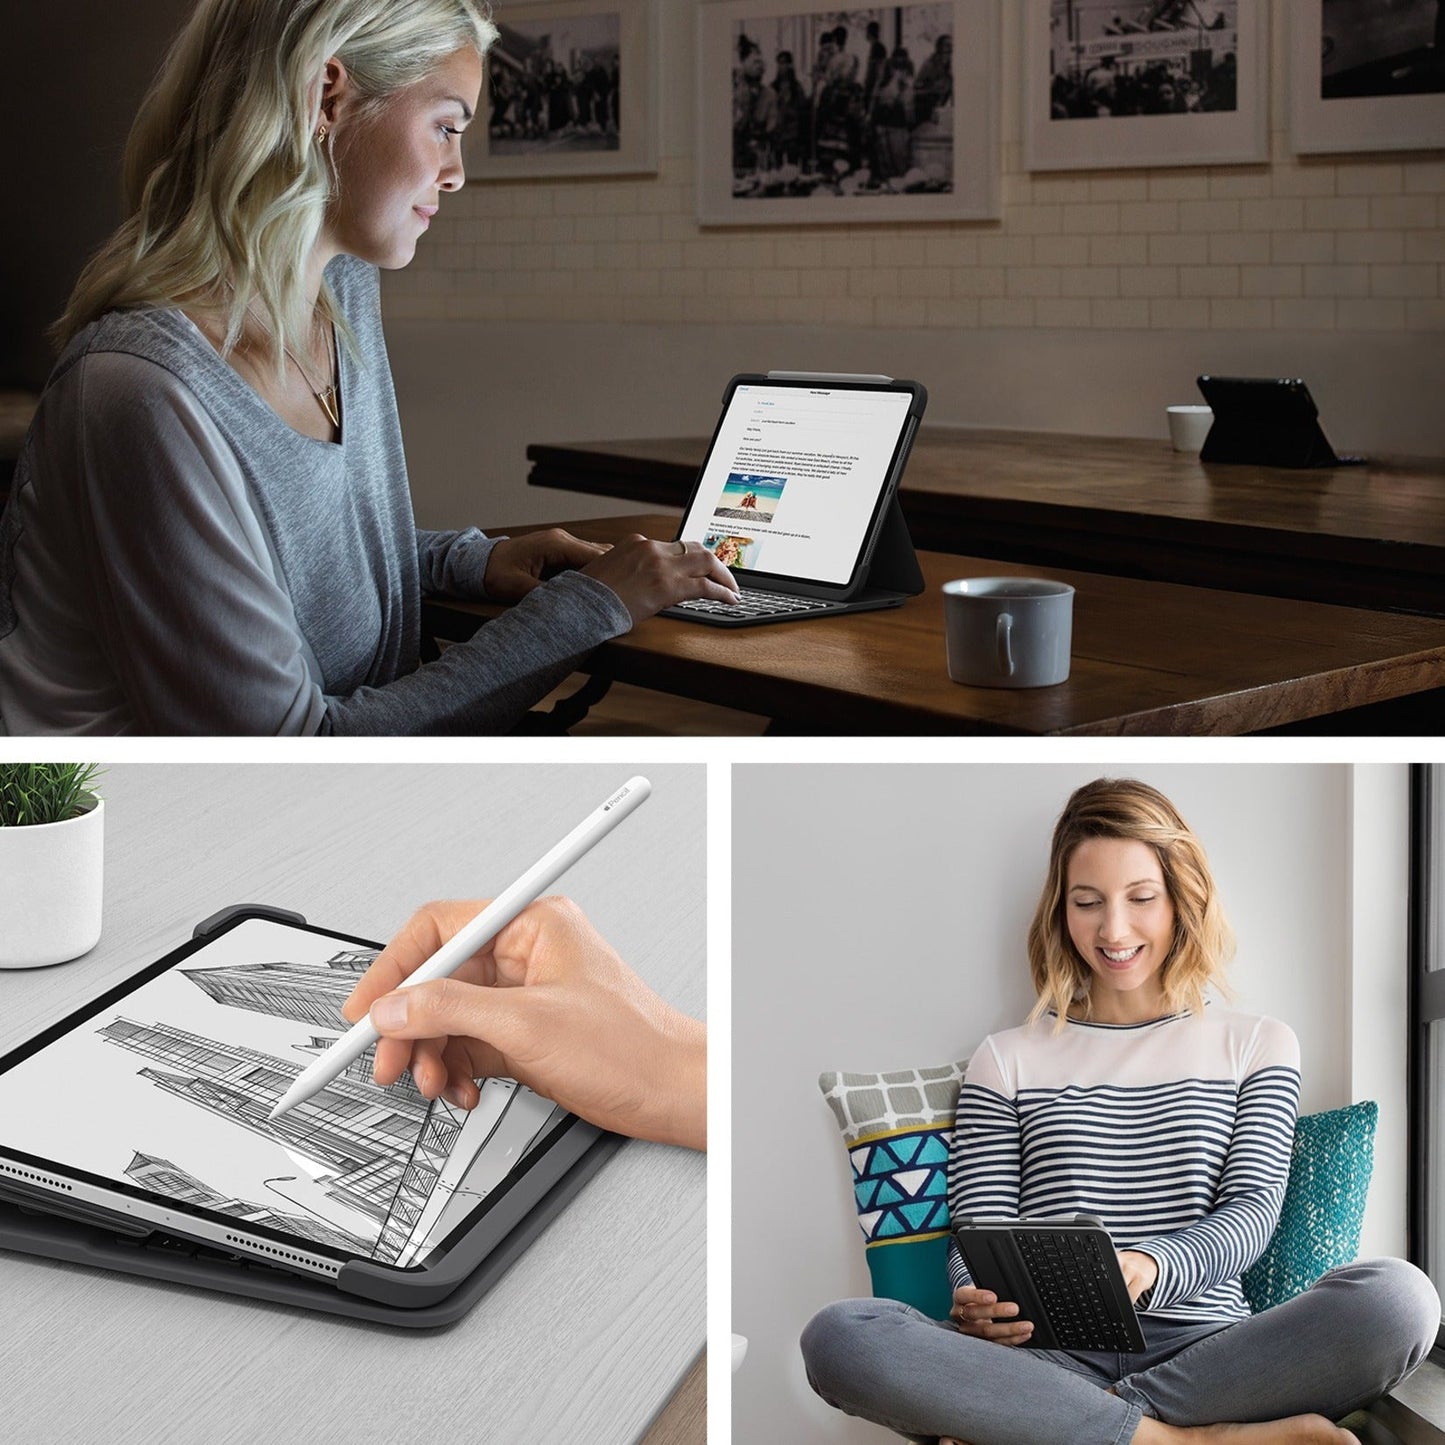 Logitech Slim Folio Pro Keyboard/Cover Case (Folio) for 12.9" Apple Logitech iPad Pro (3rd Generation) iPad Pro (4th Generation) Tablet - Oxford Gray